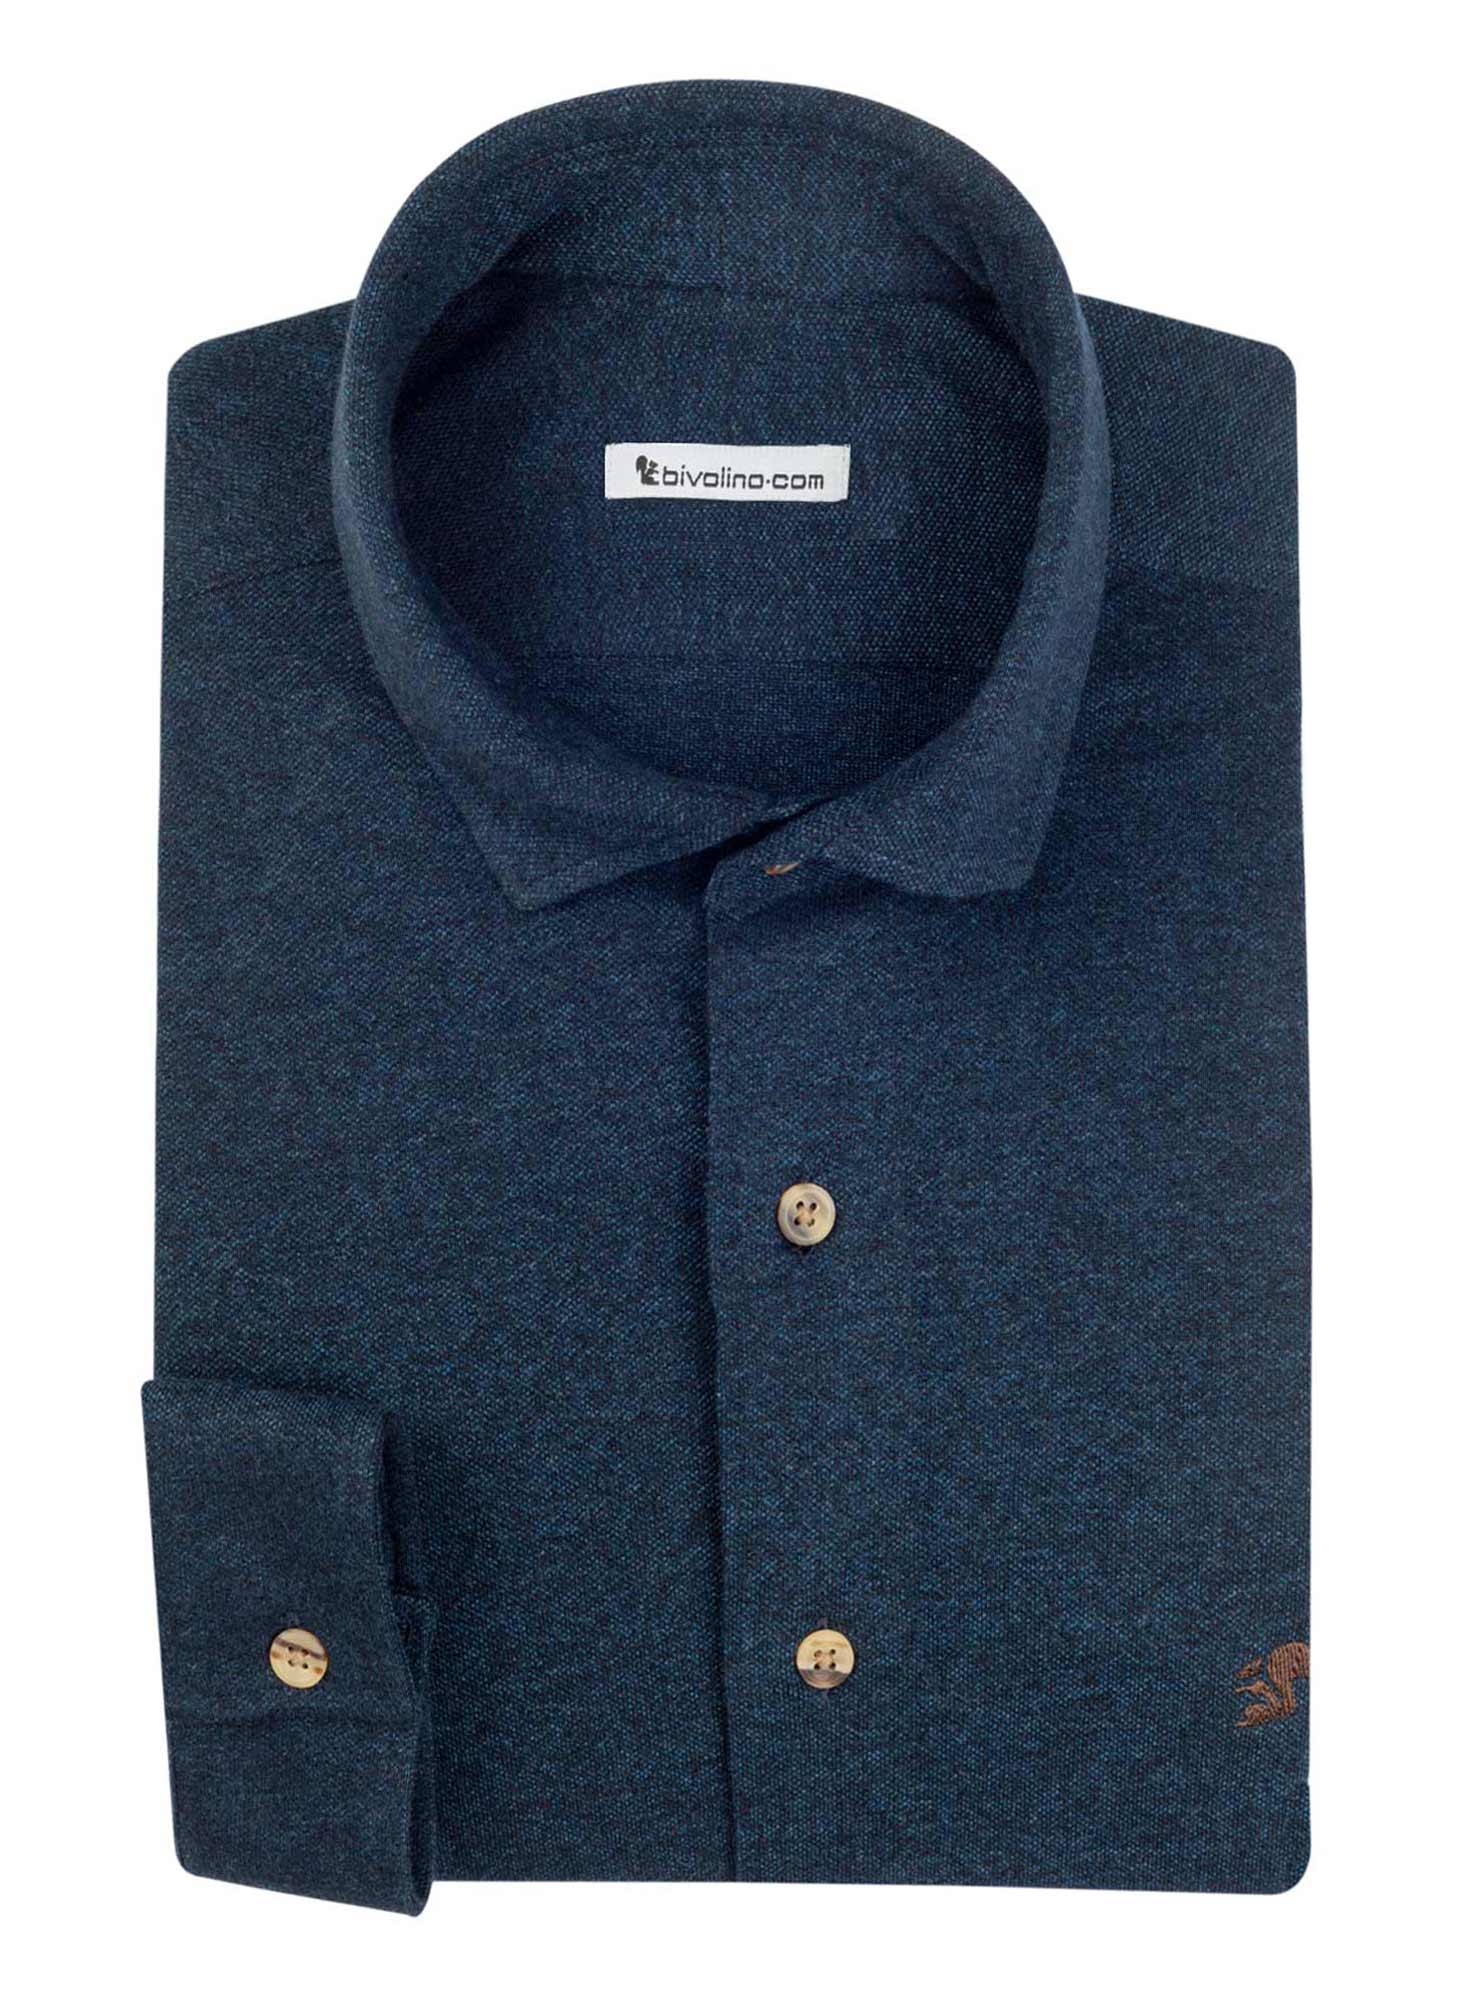 PALERMO - 100% cotton piqué Jersey navy tailored men shirt - JERSILI 4